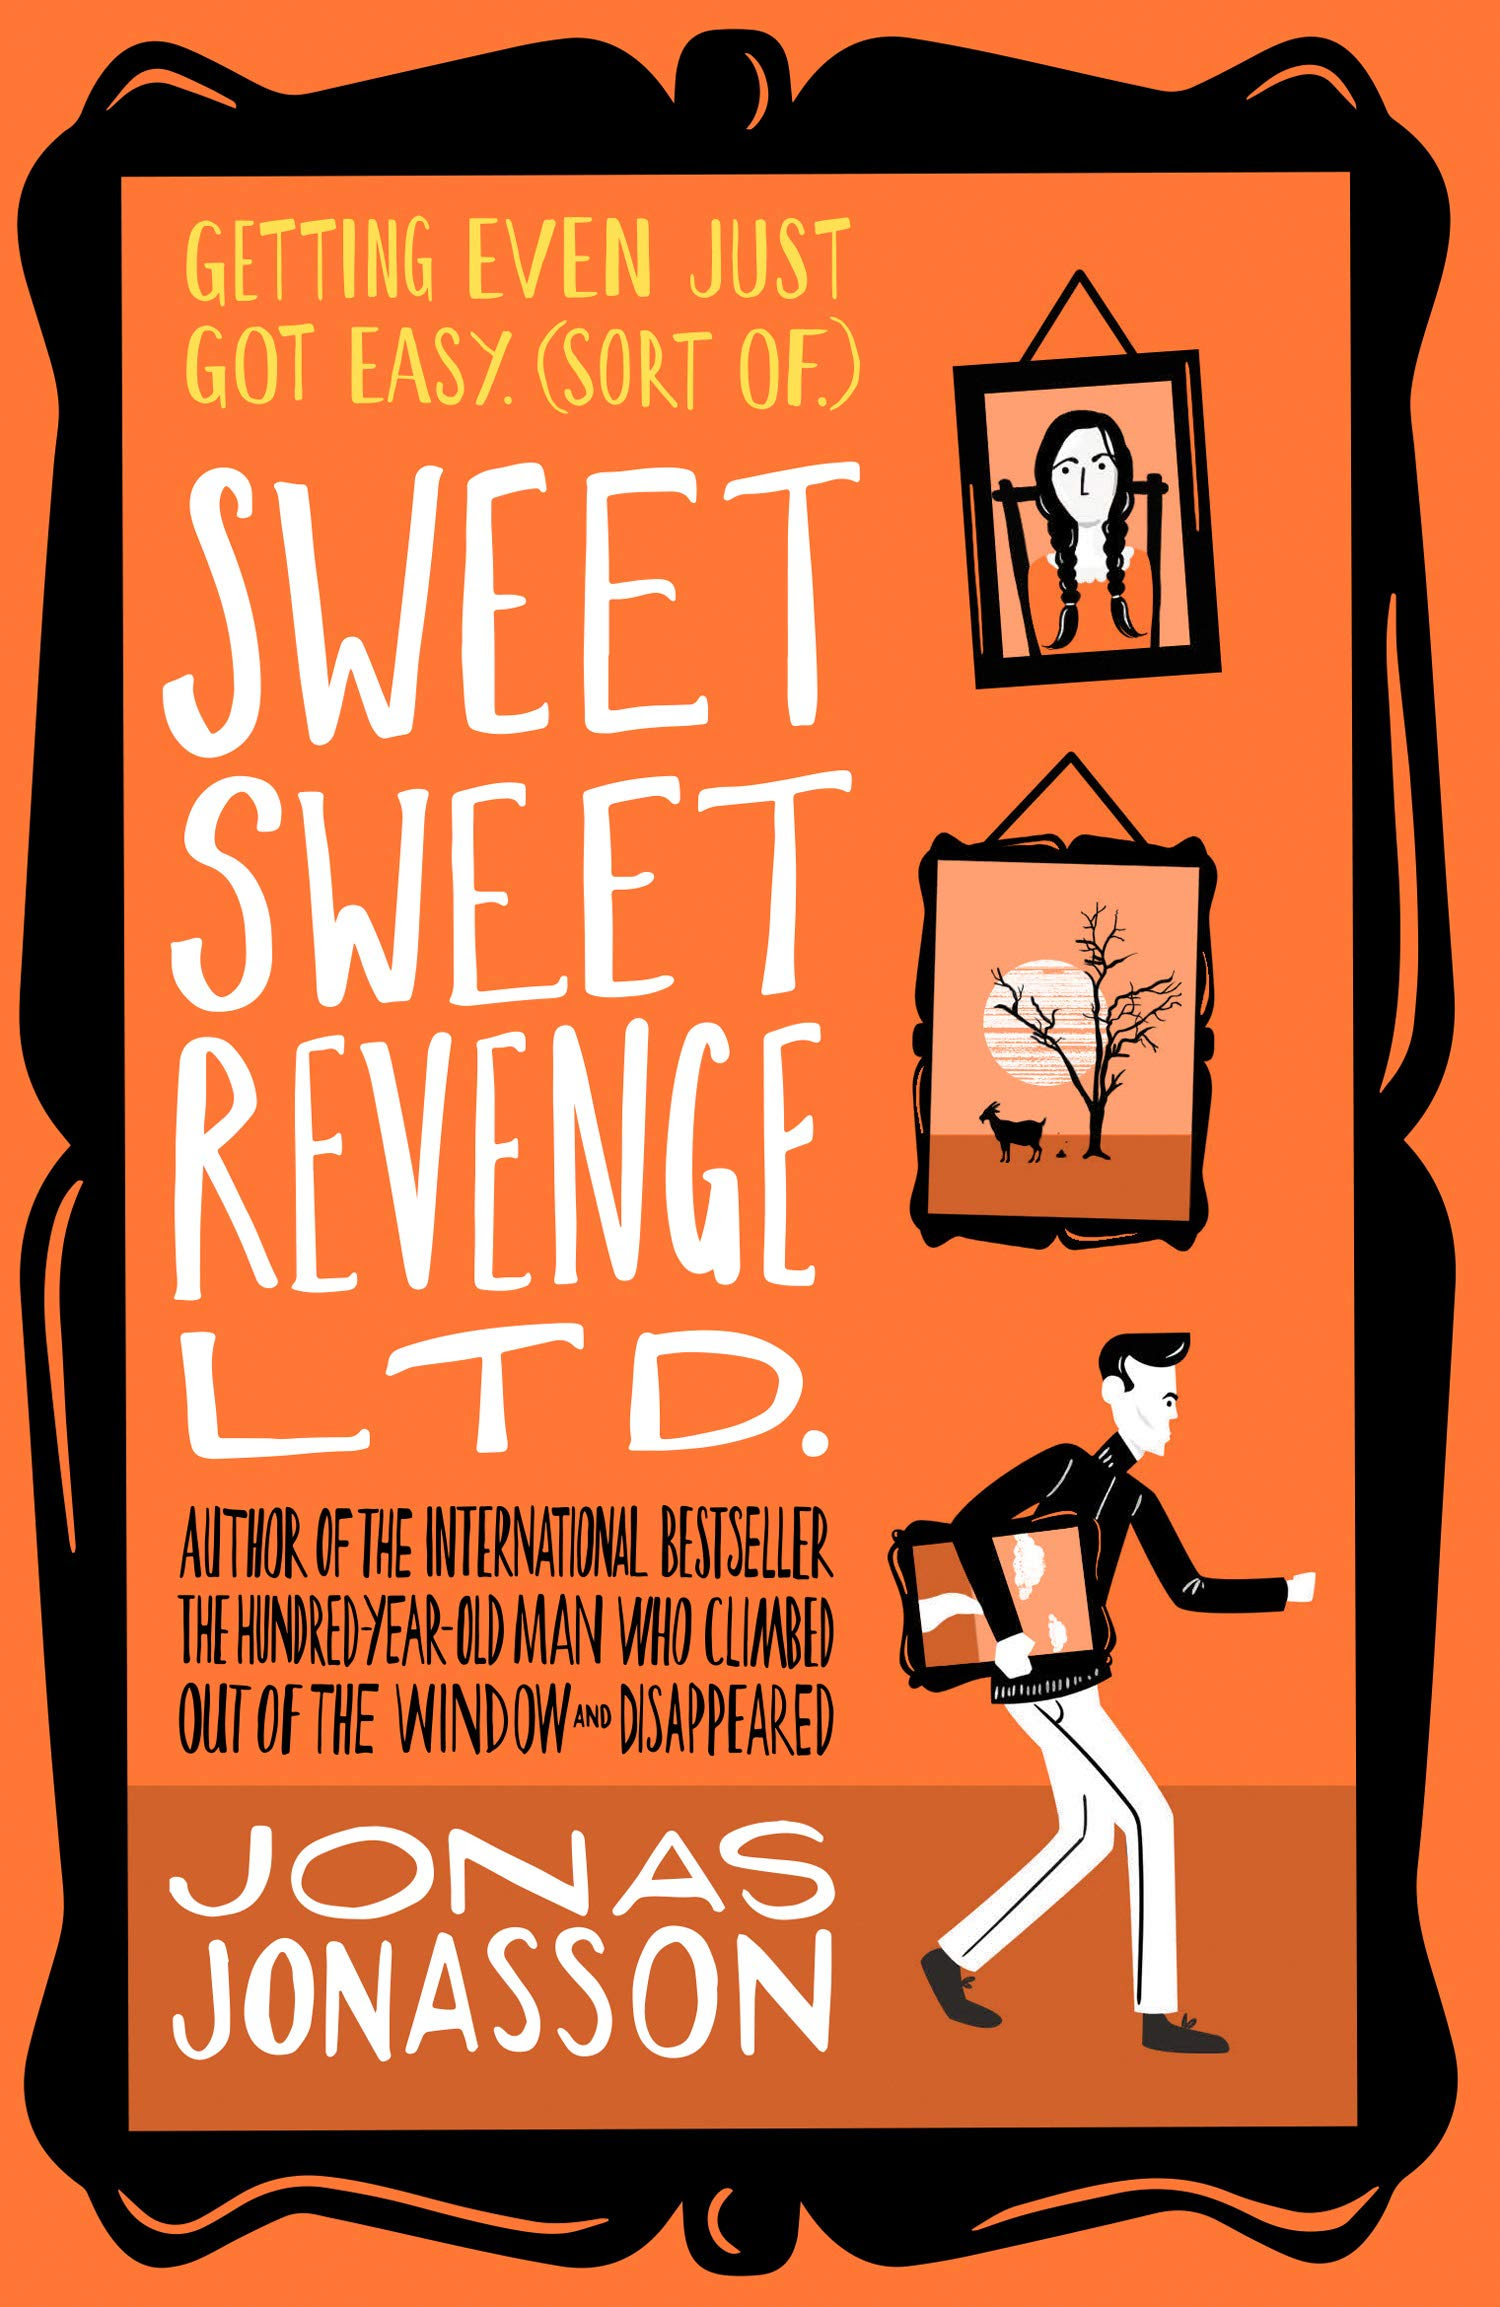 Sweet Sweet Revenge Ltd. EPUB